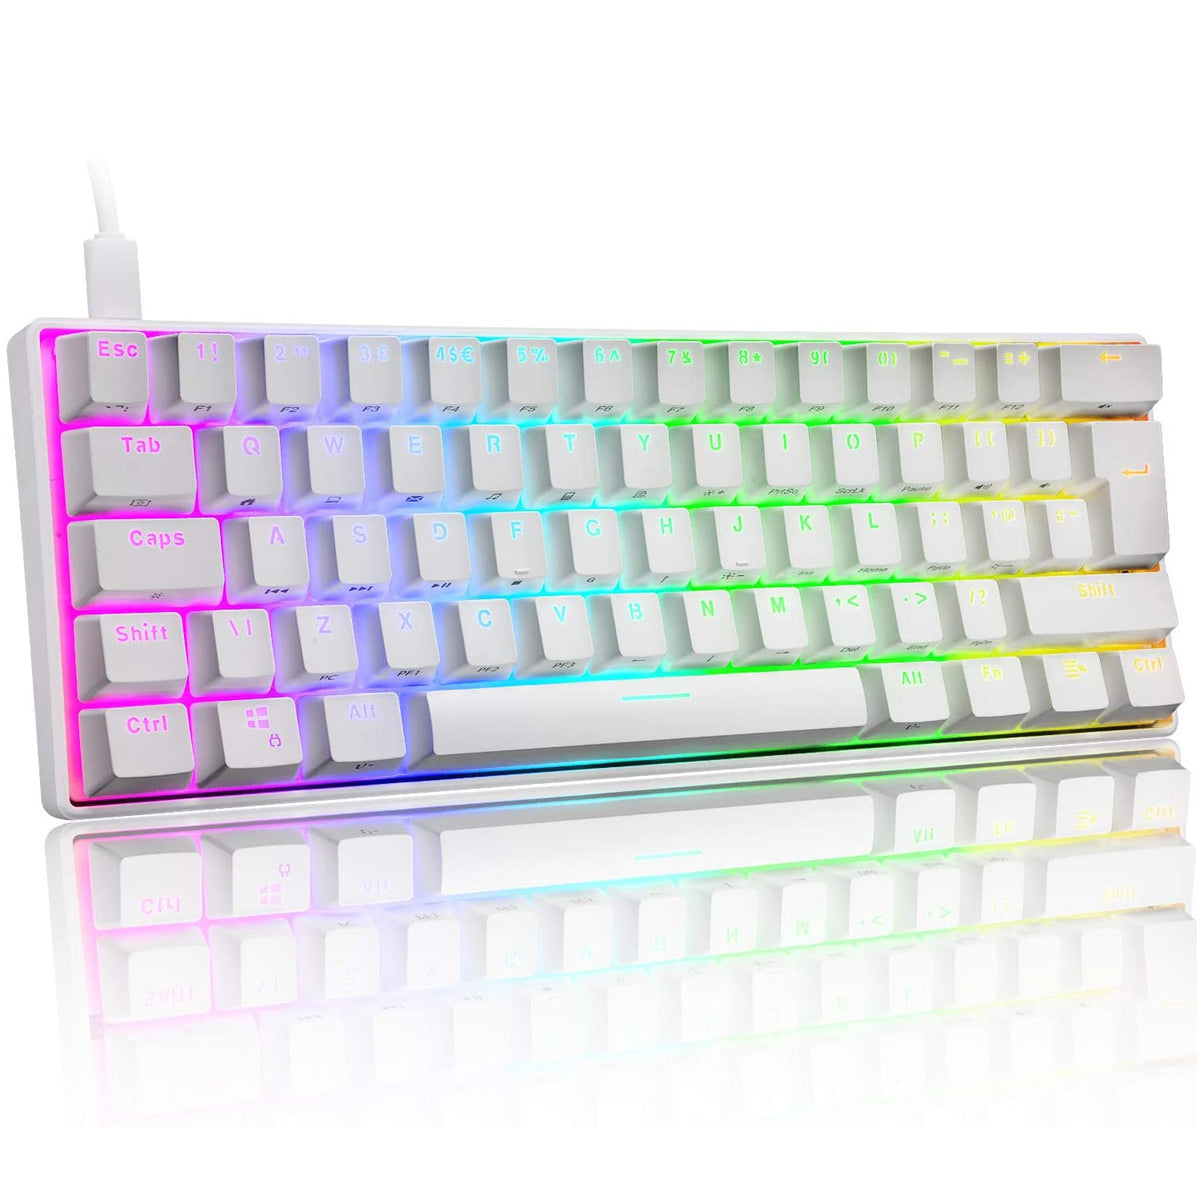 MAGIC-REFINER MK21 60% True Mechanical Gaming Keyboard UK Layout Type C Wired 62 Keys 14 Chroma RGB Backlight Keyboard Full Anti-ghosting